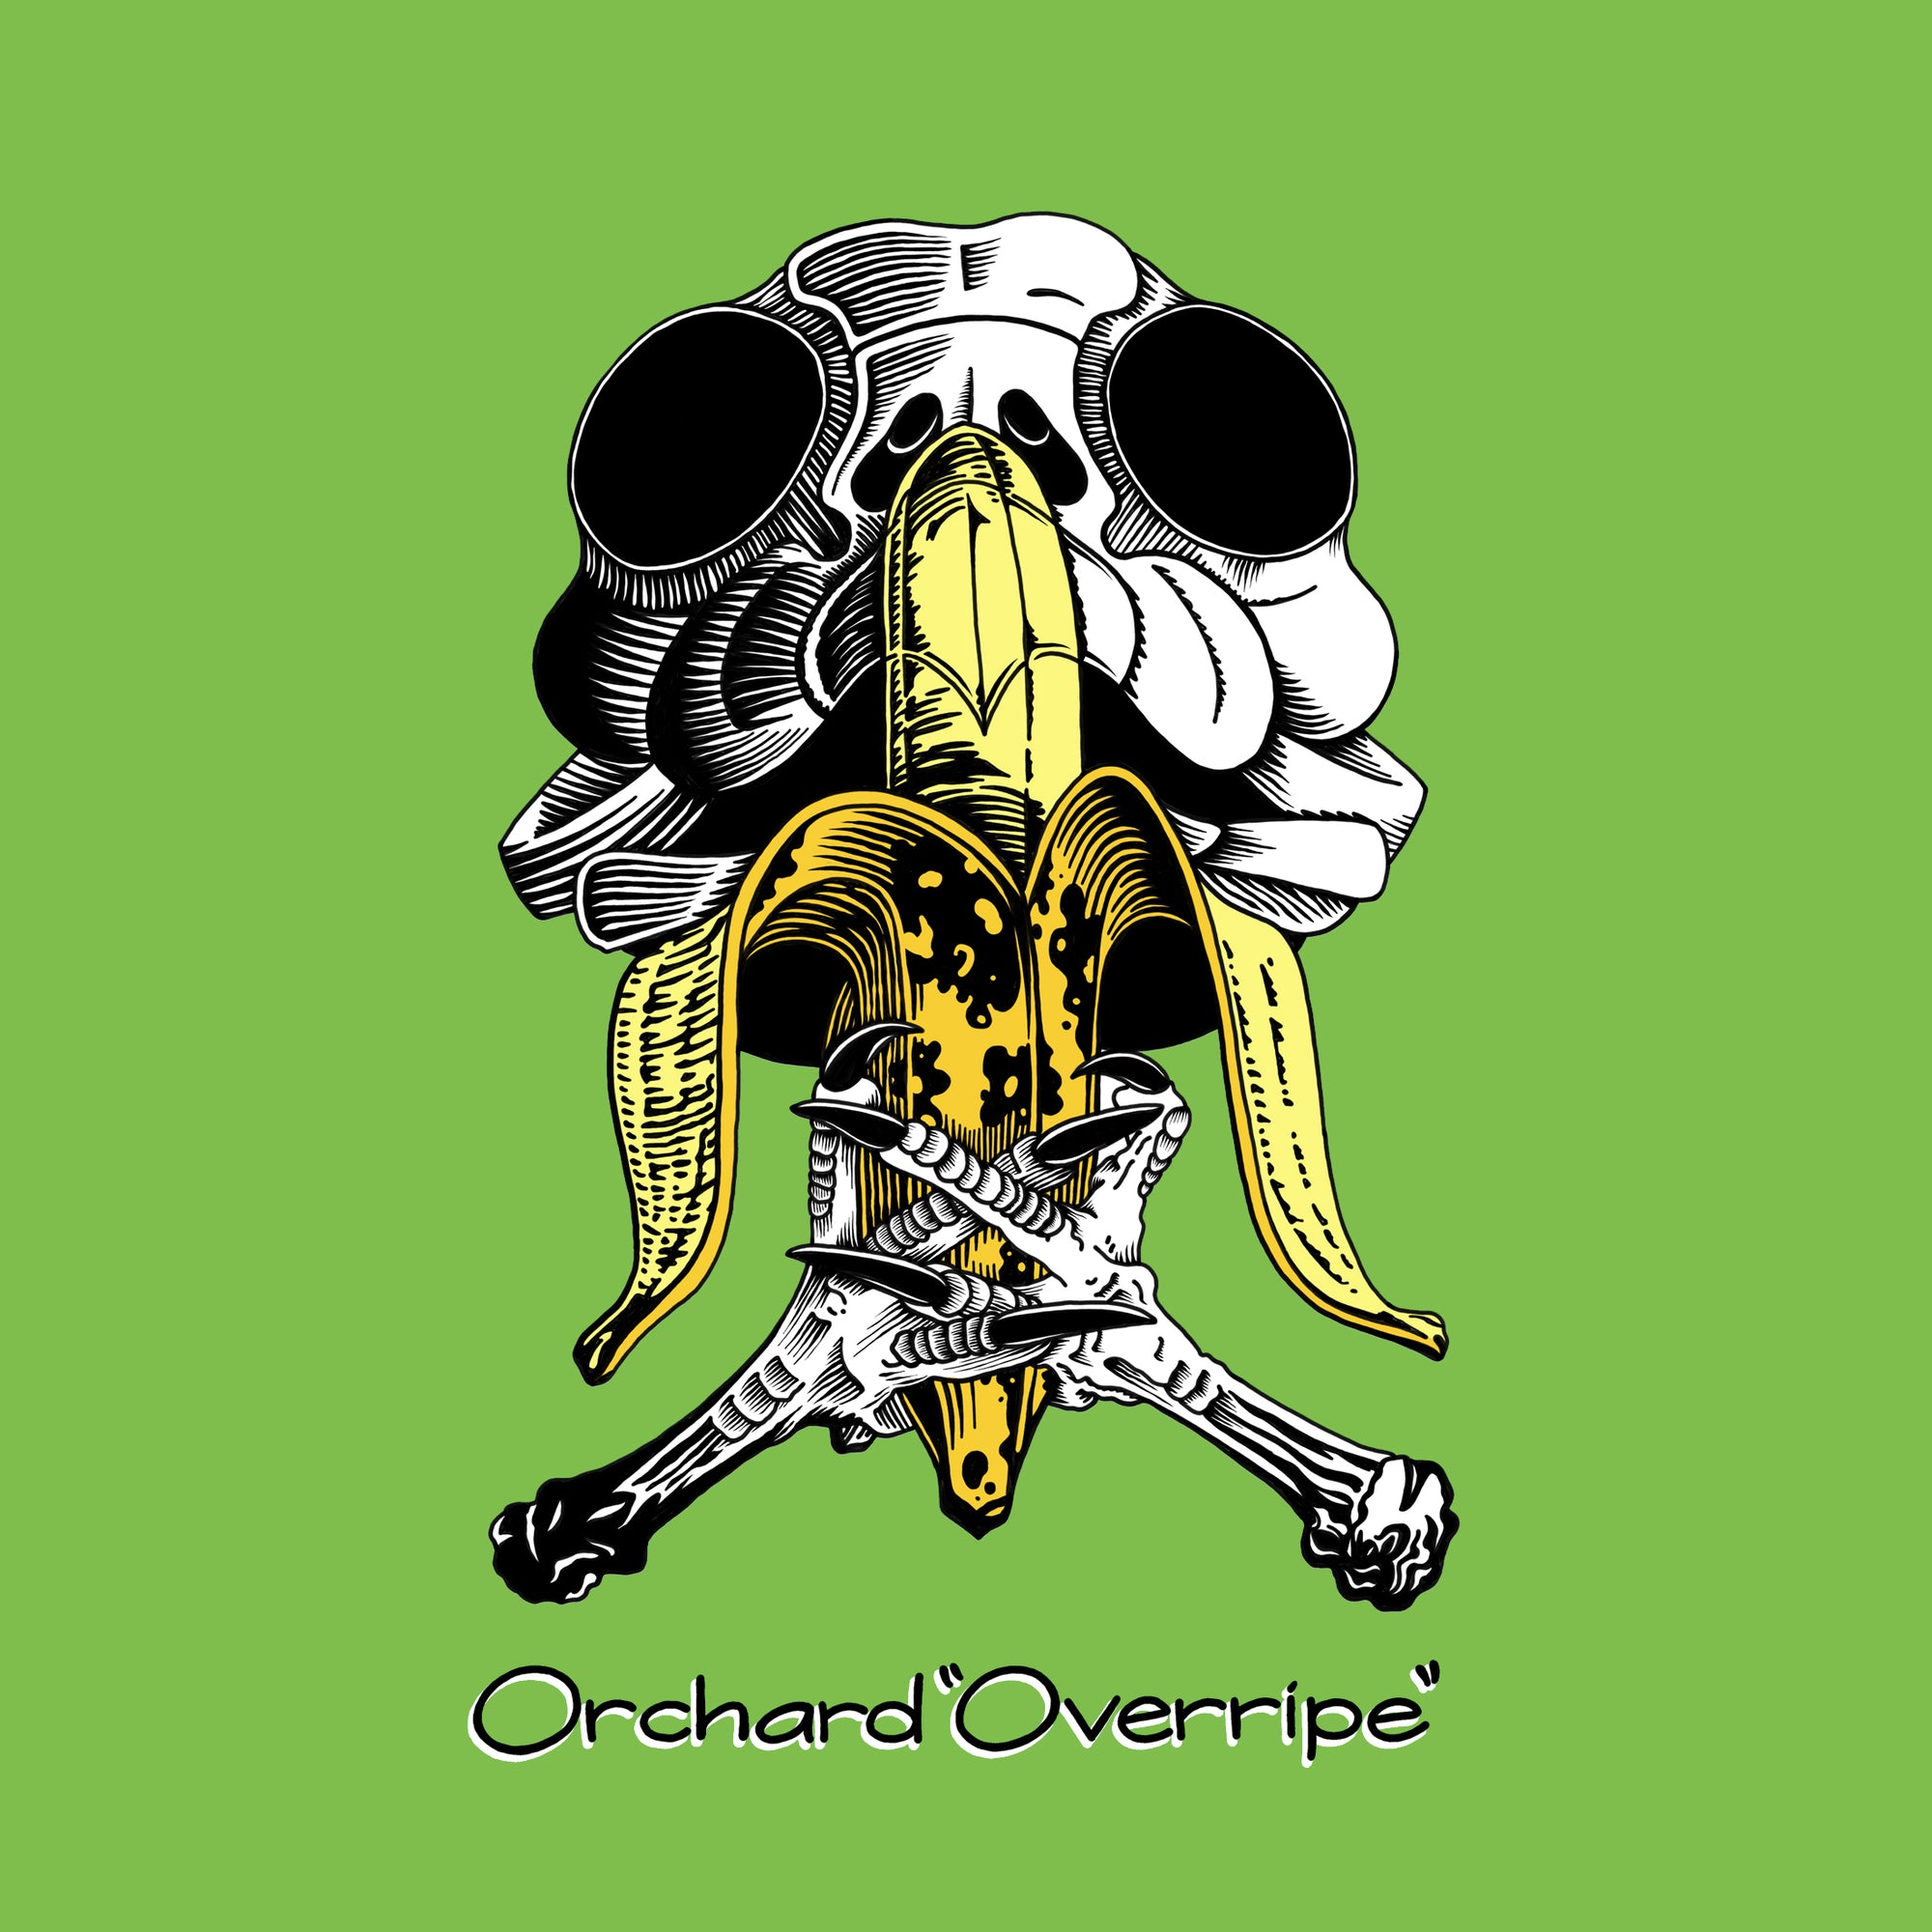 Orchard Overripe - For the Skatehoarders